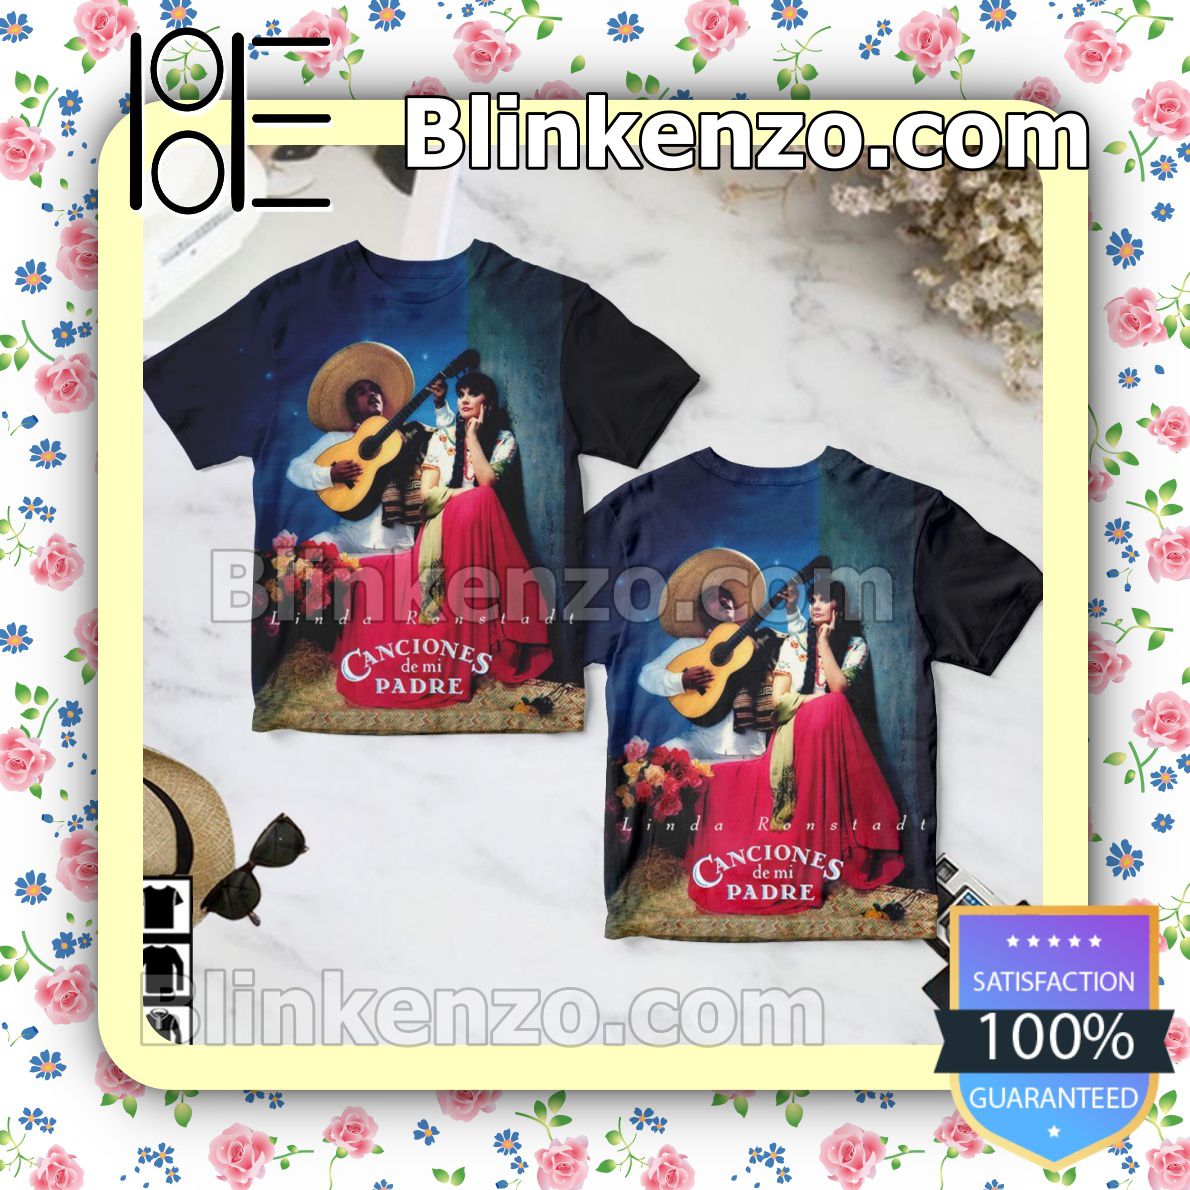 Linda Ronstadt Canciones De Mi Padre Album Cover Birthday Shirt - Blinkenzo